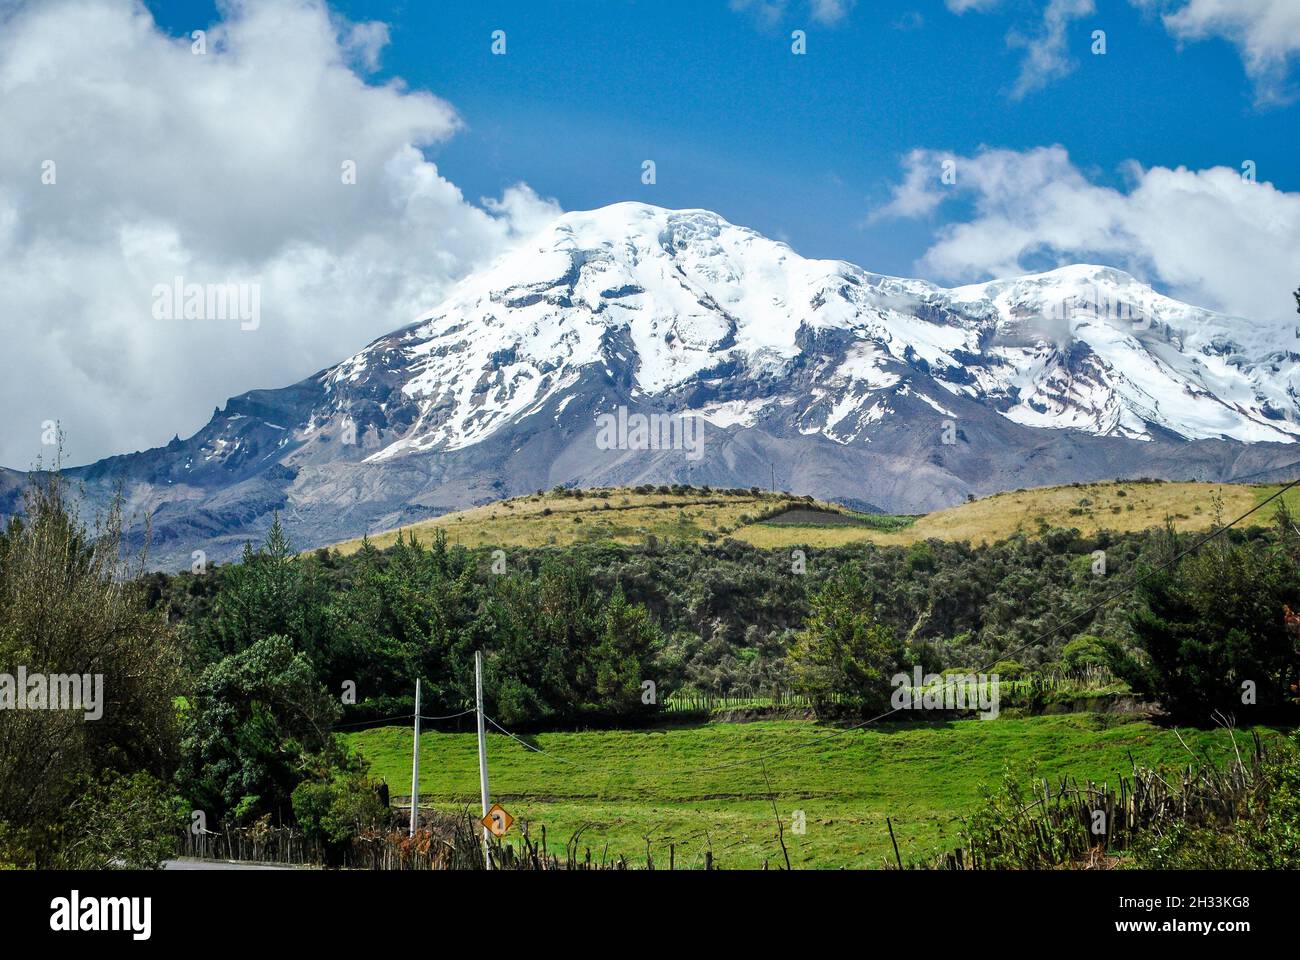 Landscape with Chimborazo volcano, Ecuador Stock Photo